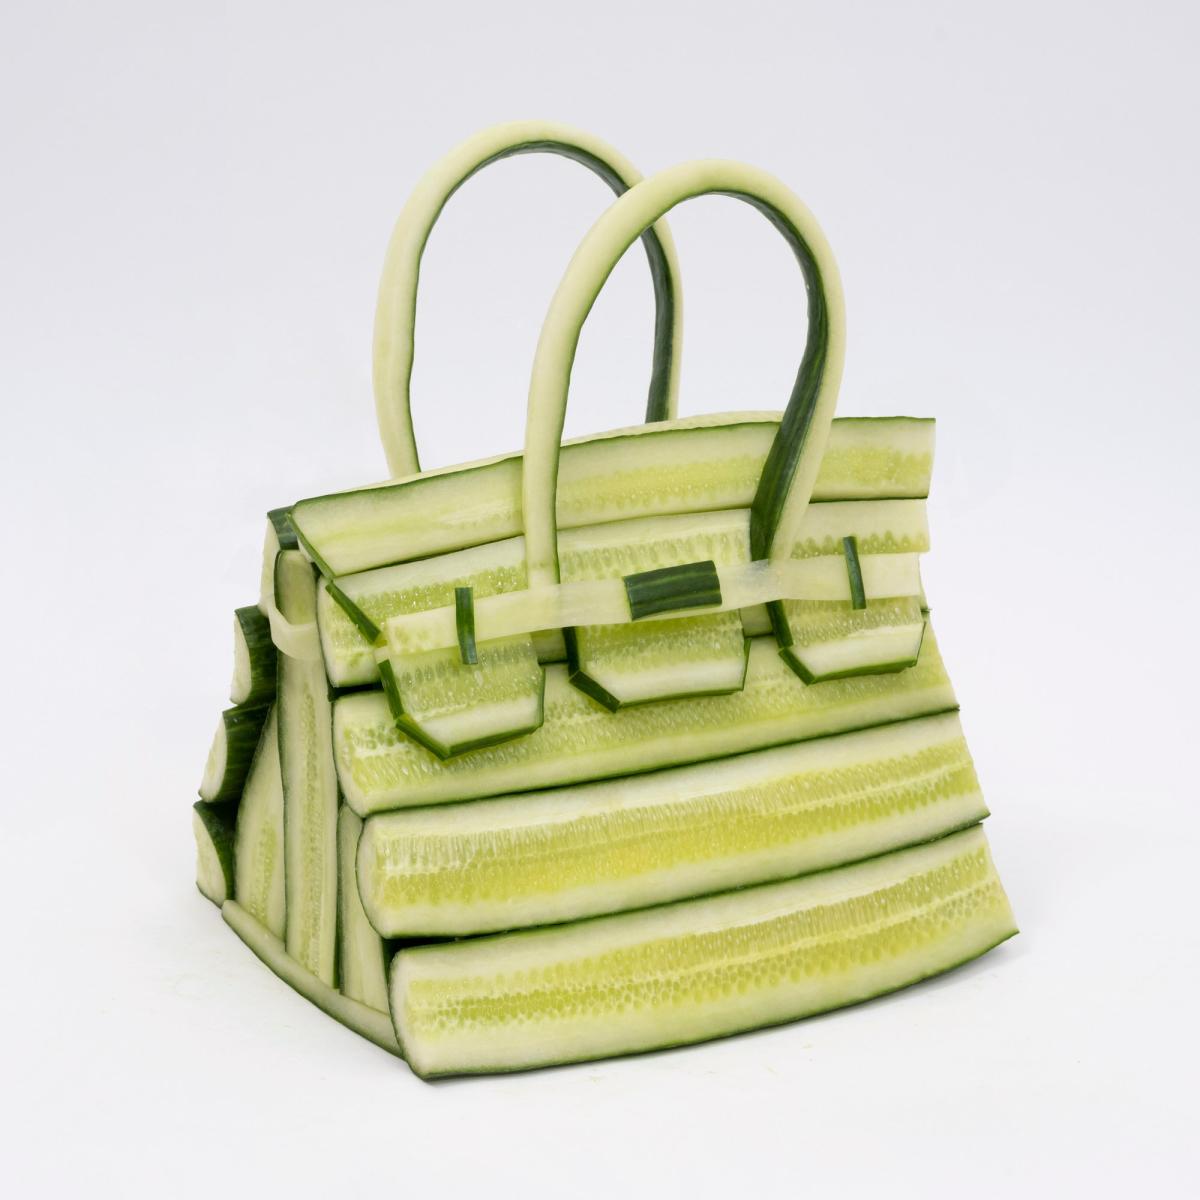 Artist Recreates Iconic Hermès Birkin Bag With Vegetables